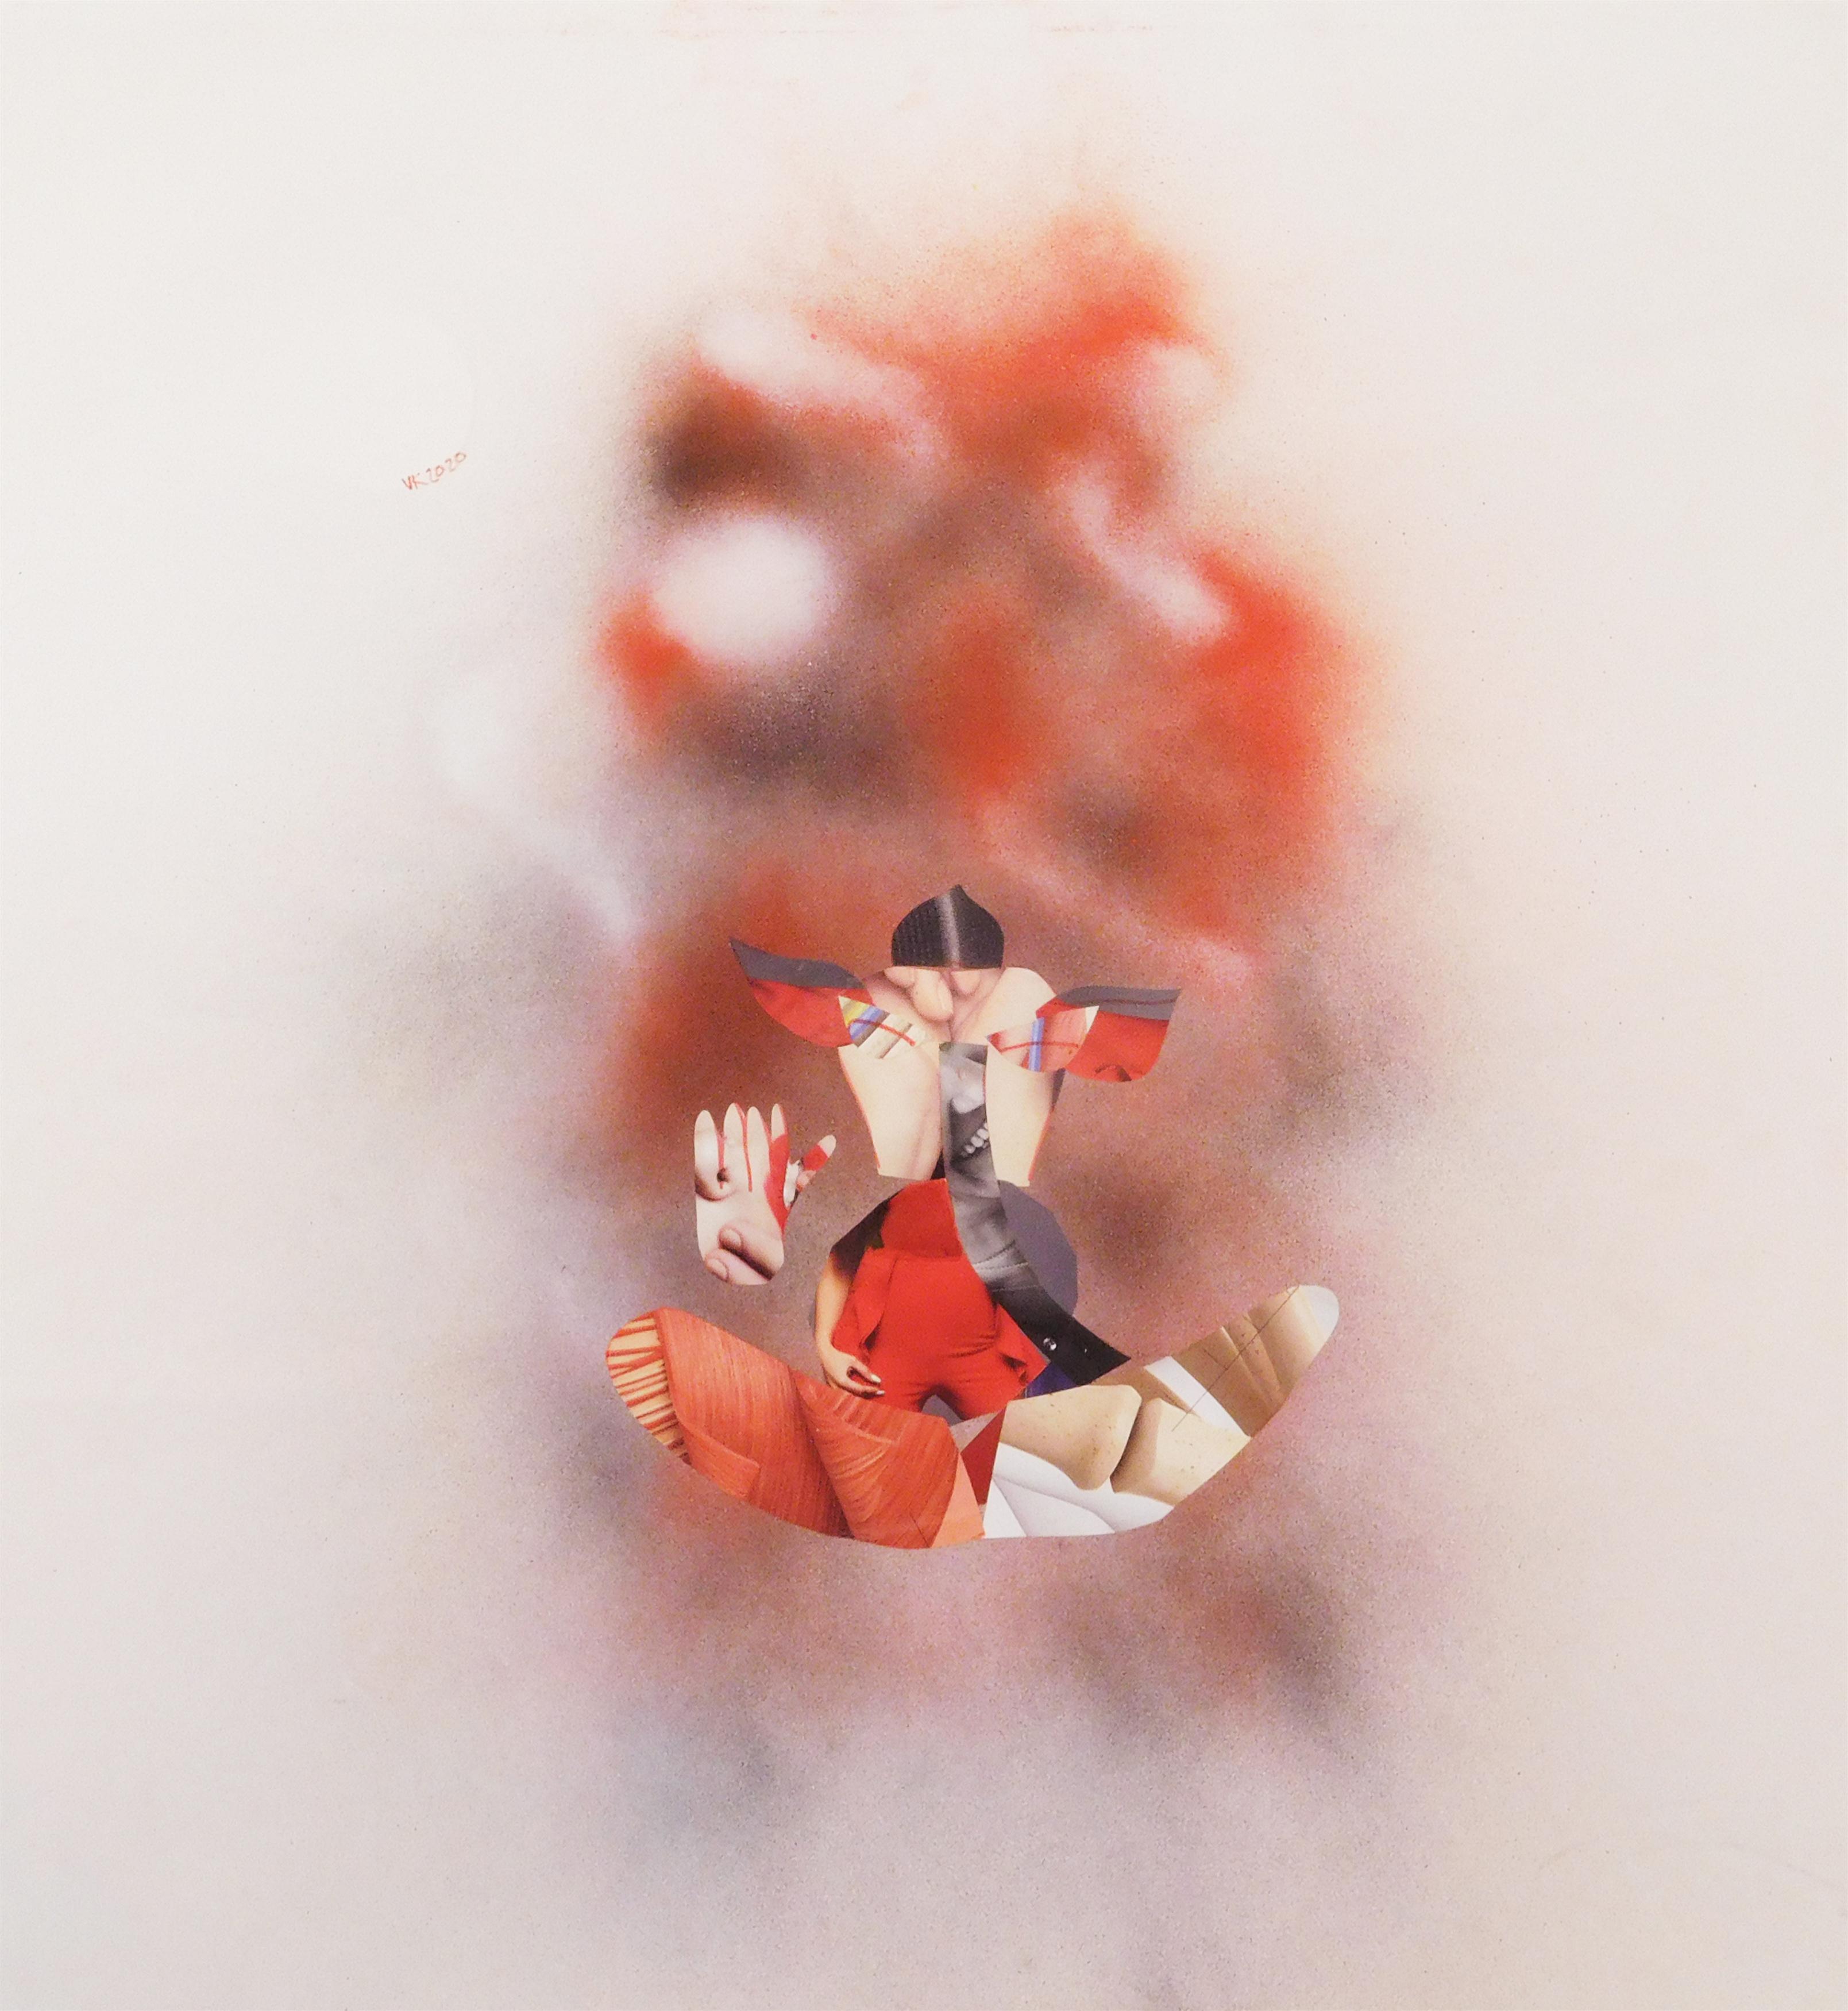 Viraaj Khanna, Untitled. Mixed Media on Paper, 24 x 22 inches, 2020.